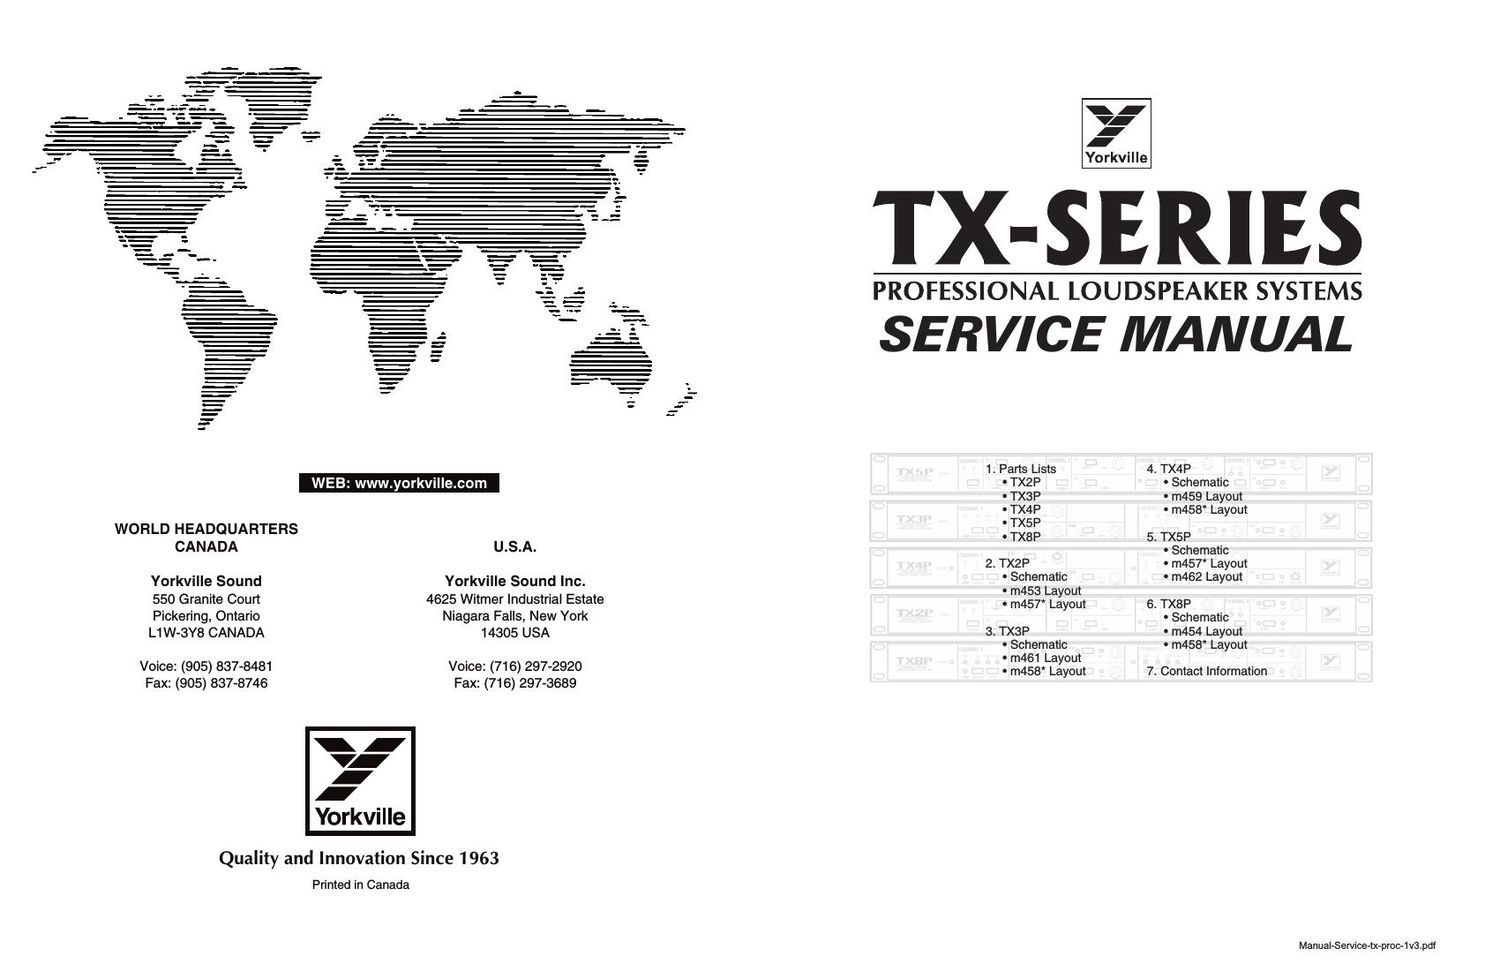 Yorkville TX Series Service Manual